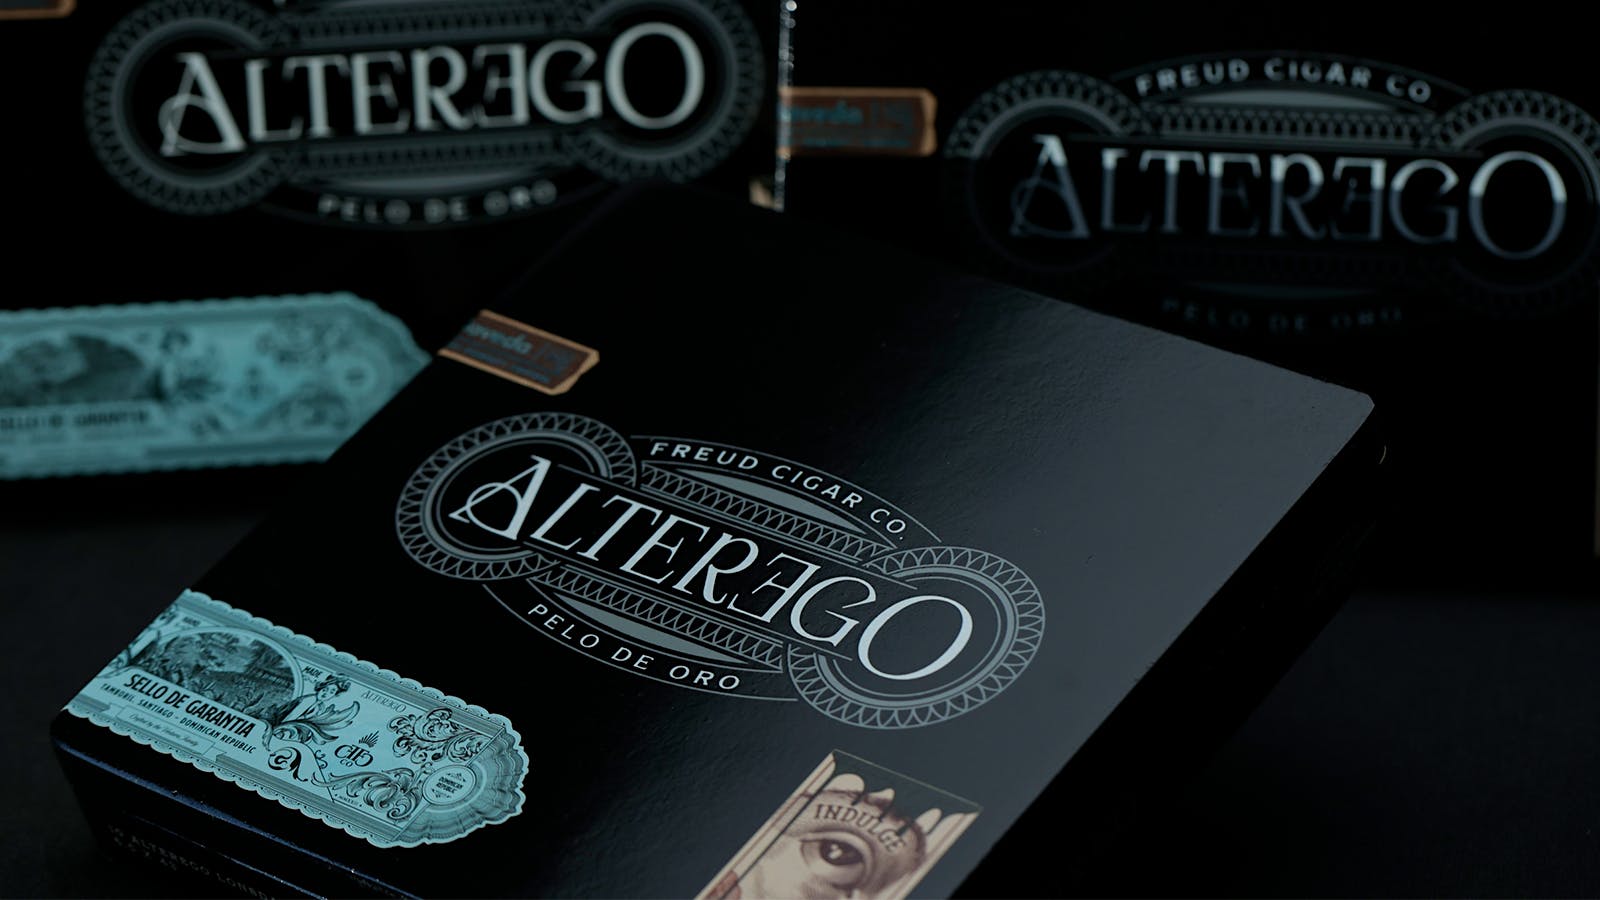 freud-cigar-to-introduce-alterego-this-month-|-cigar-aficionado